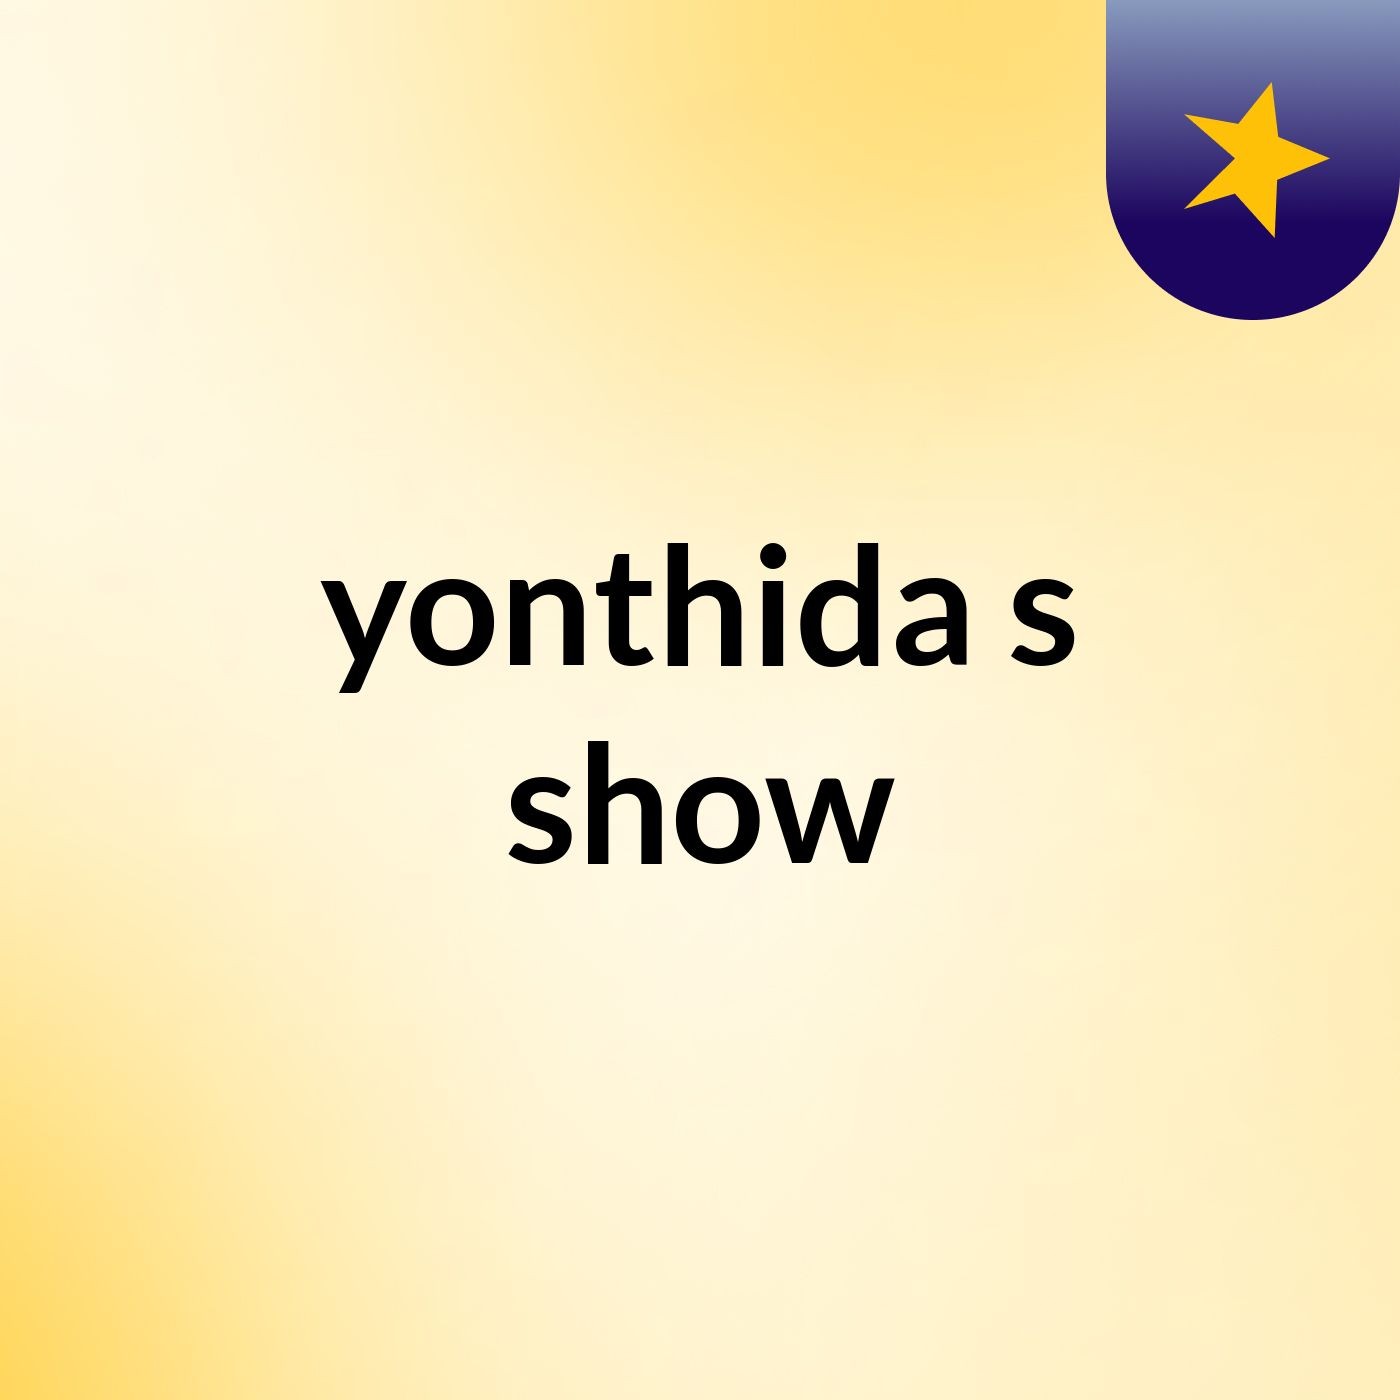 yonthida's show